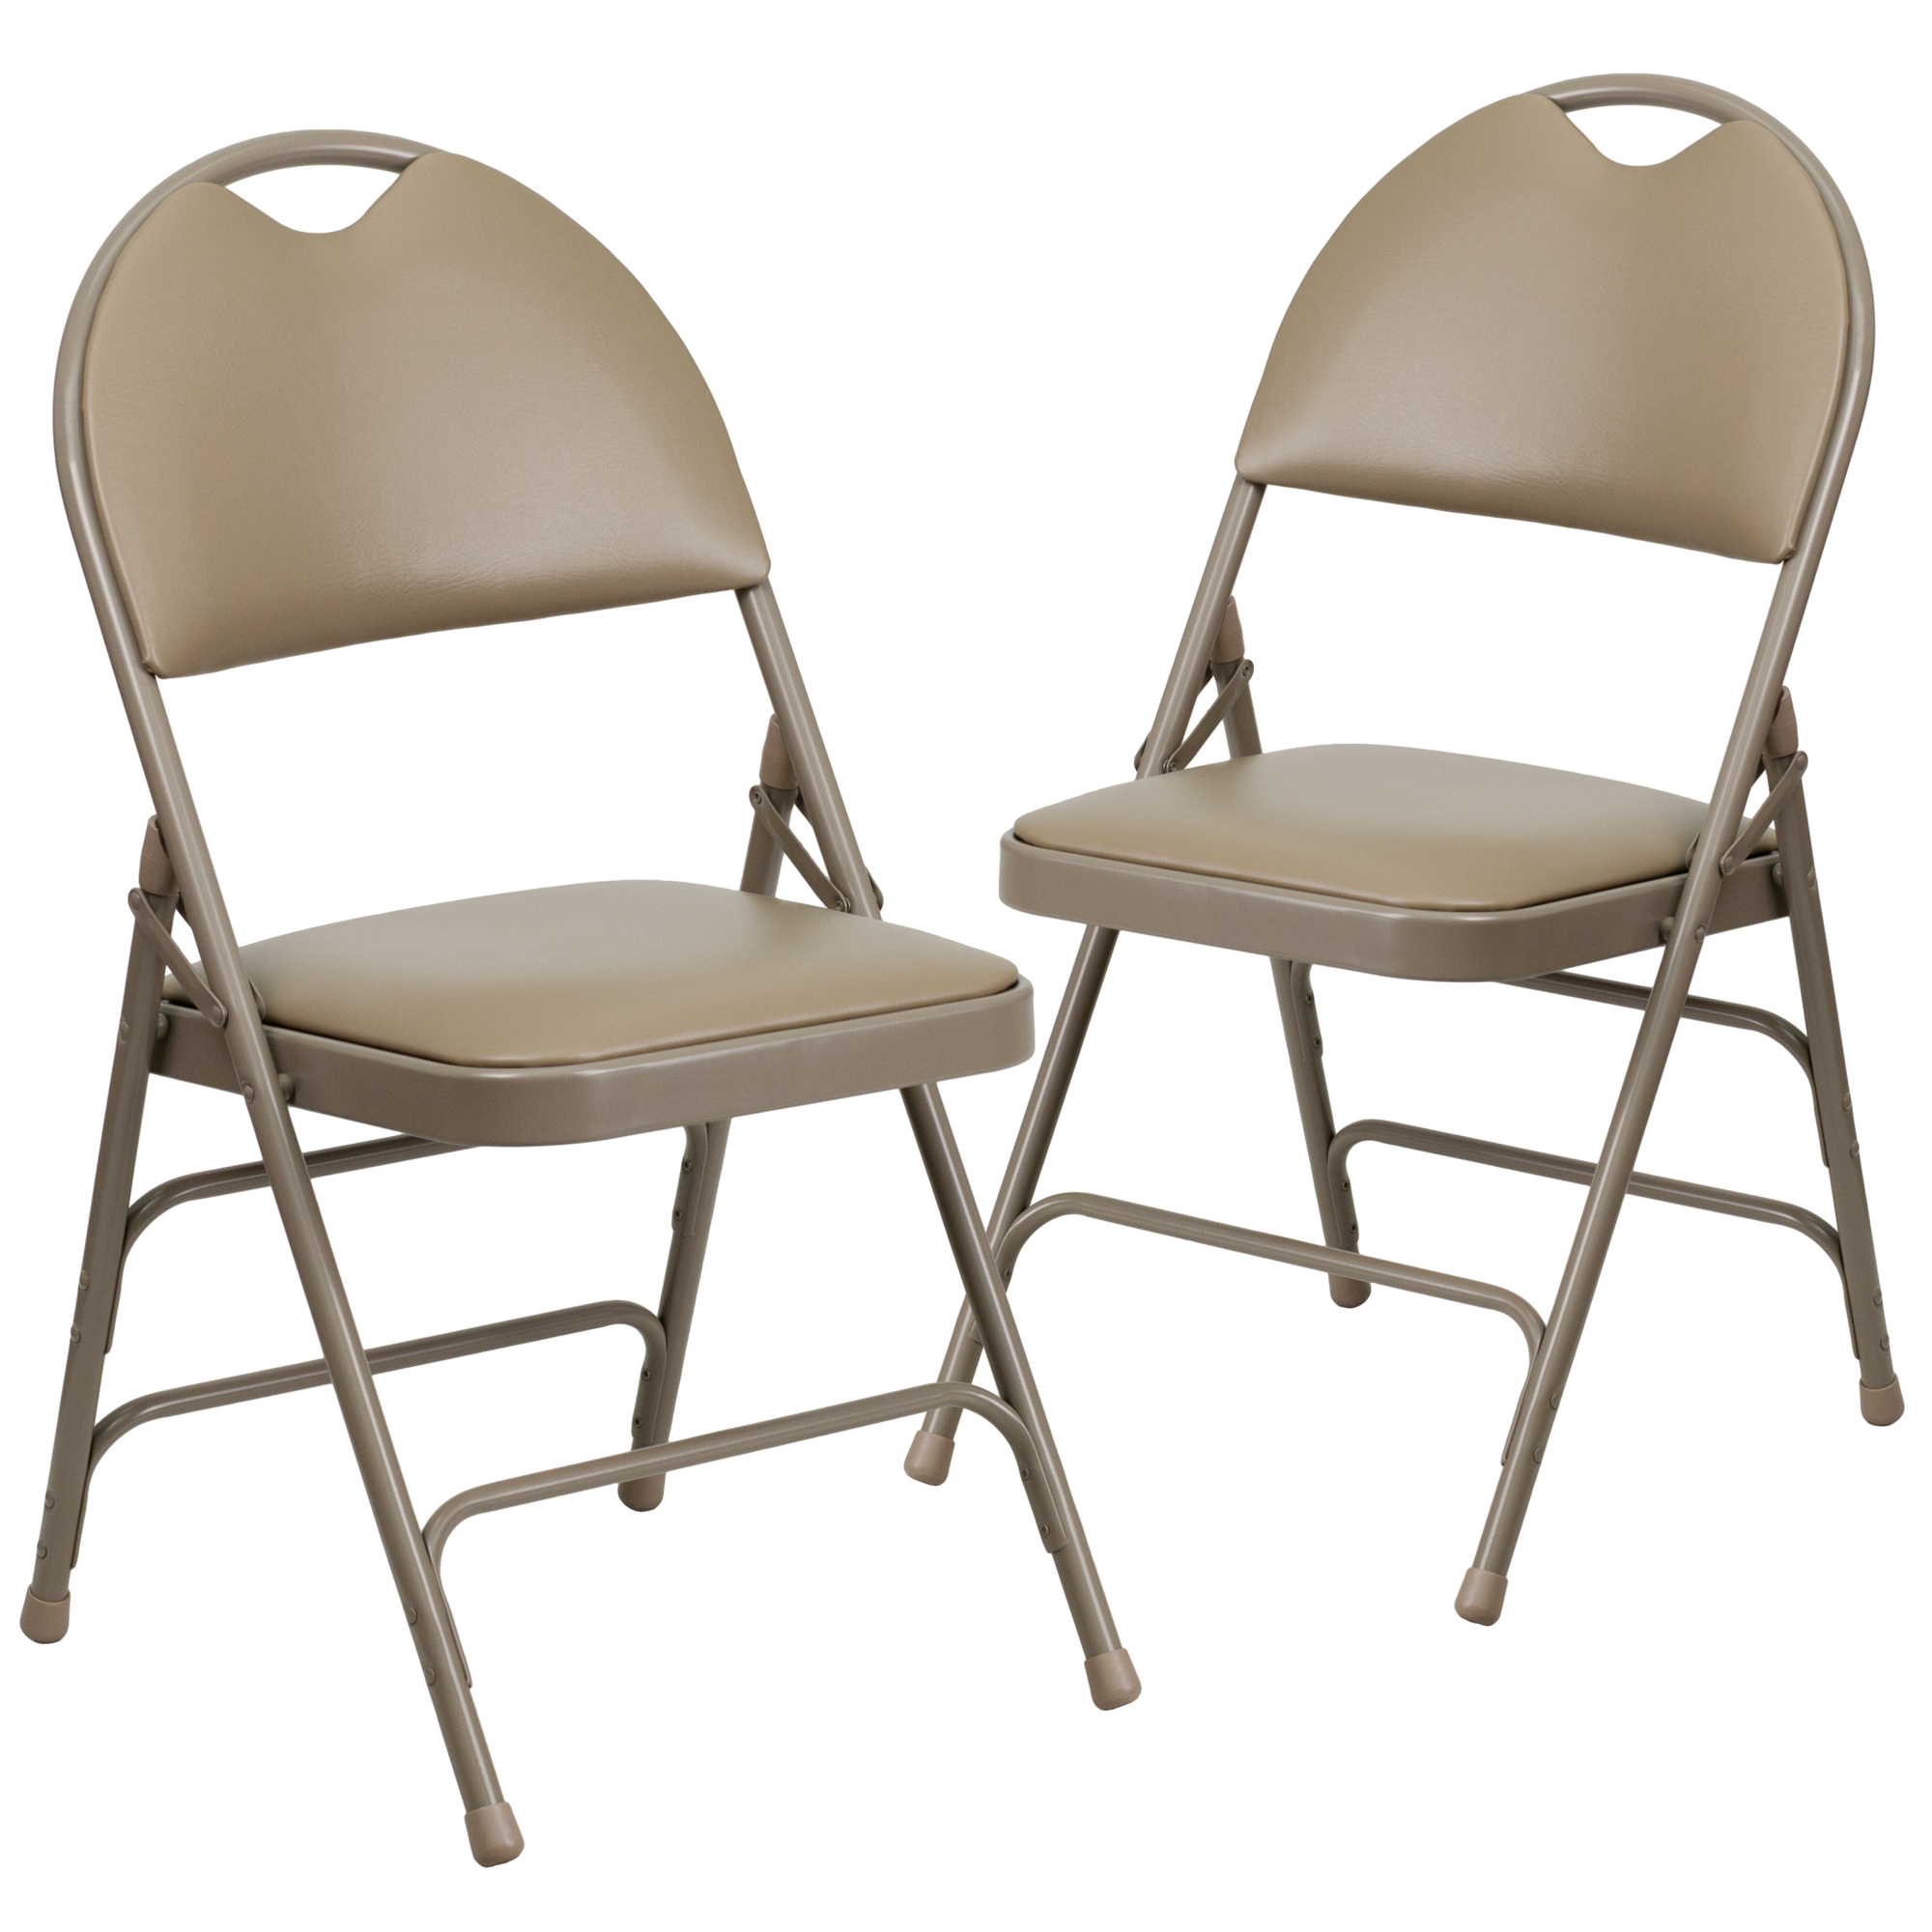 Flash Furniture, 2PK Triple Braced Beige Vinyl Metal Folding Chair, Primary Color Beige, Included (qty.) 2, Model 2HAMC705AV3BGE